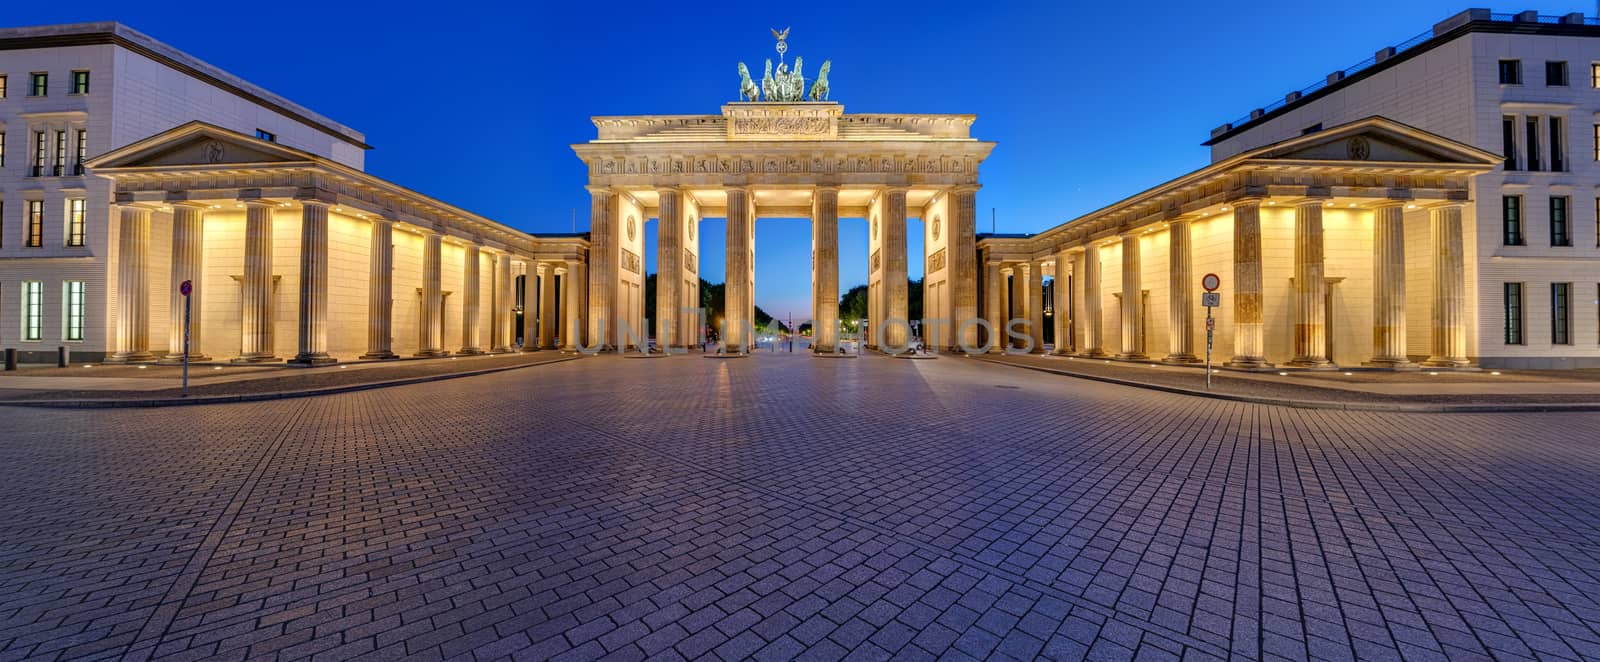 Panorama of the illuminated Brandenburg Gate by elxeneize